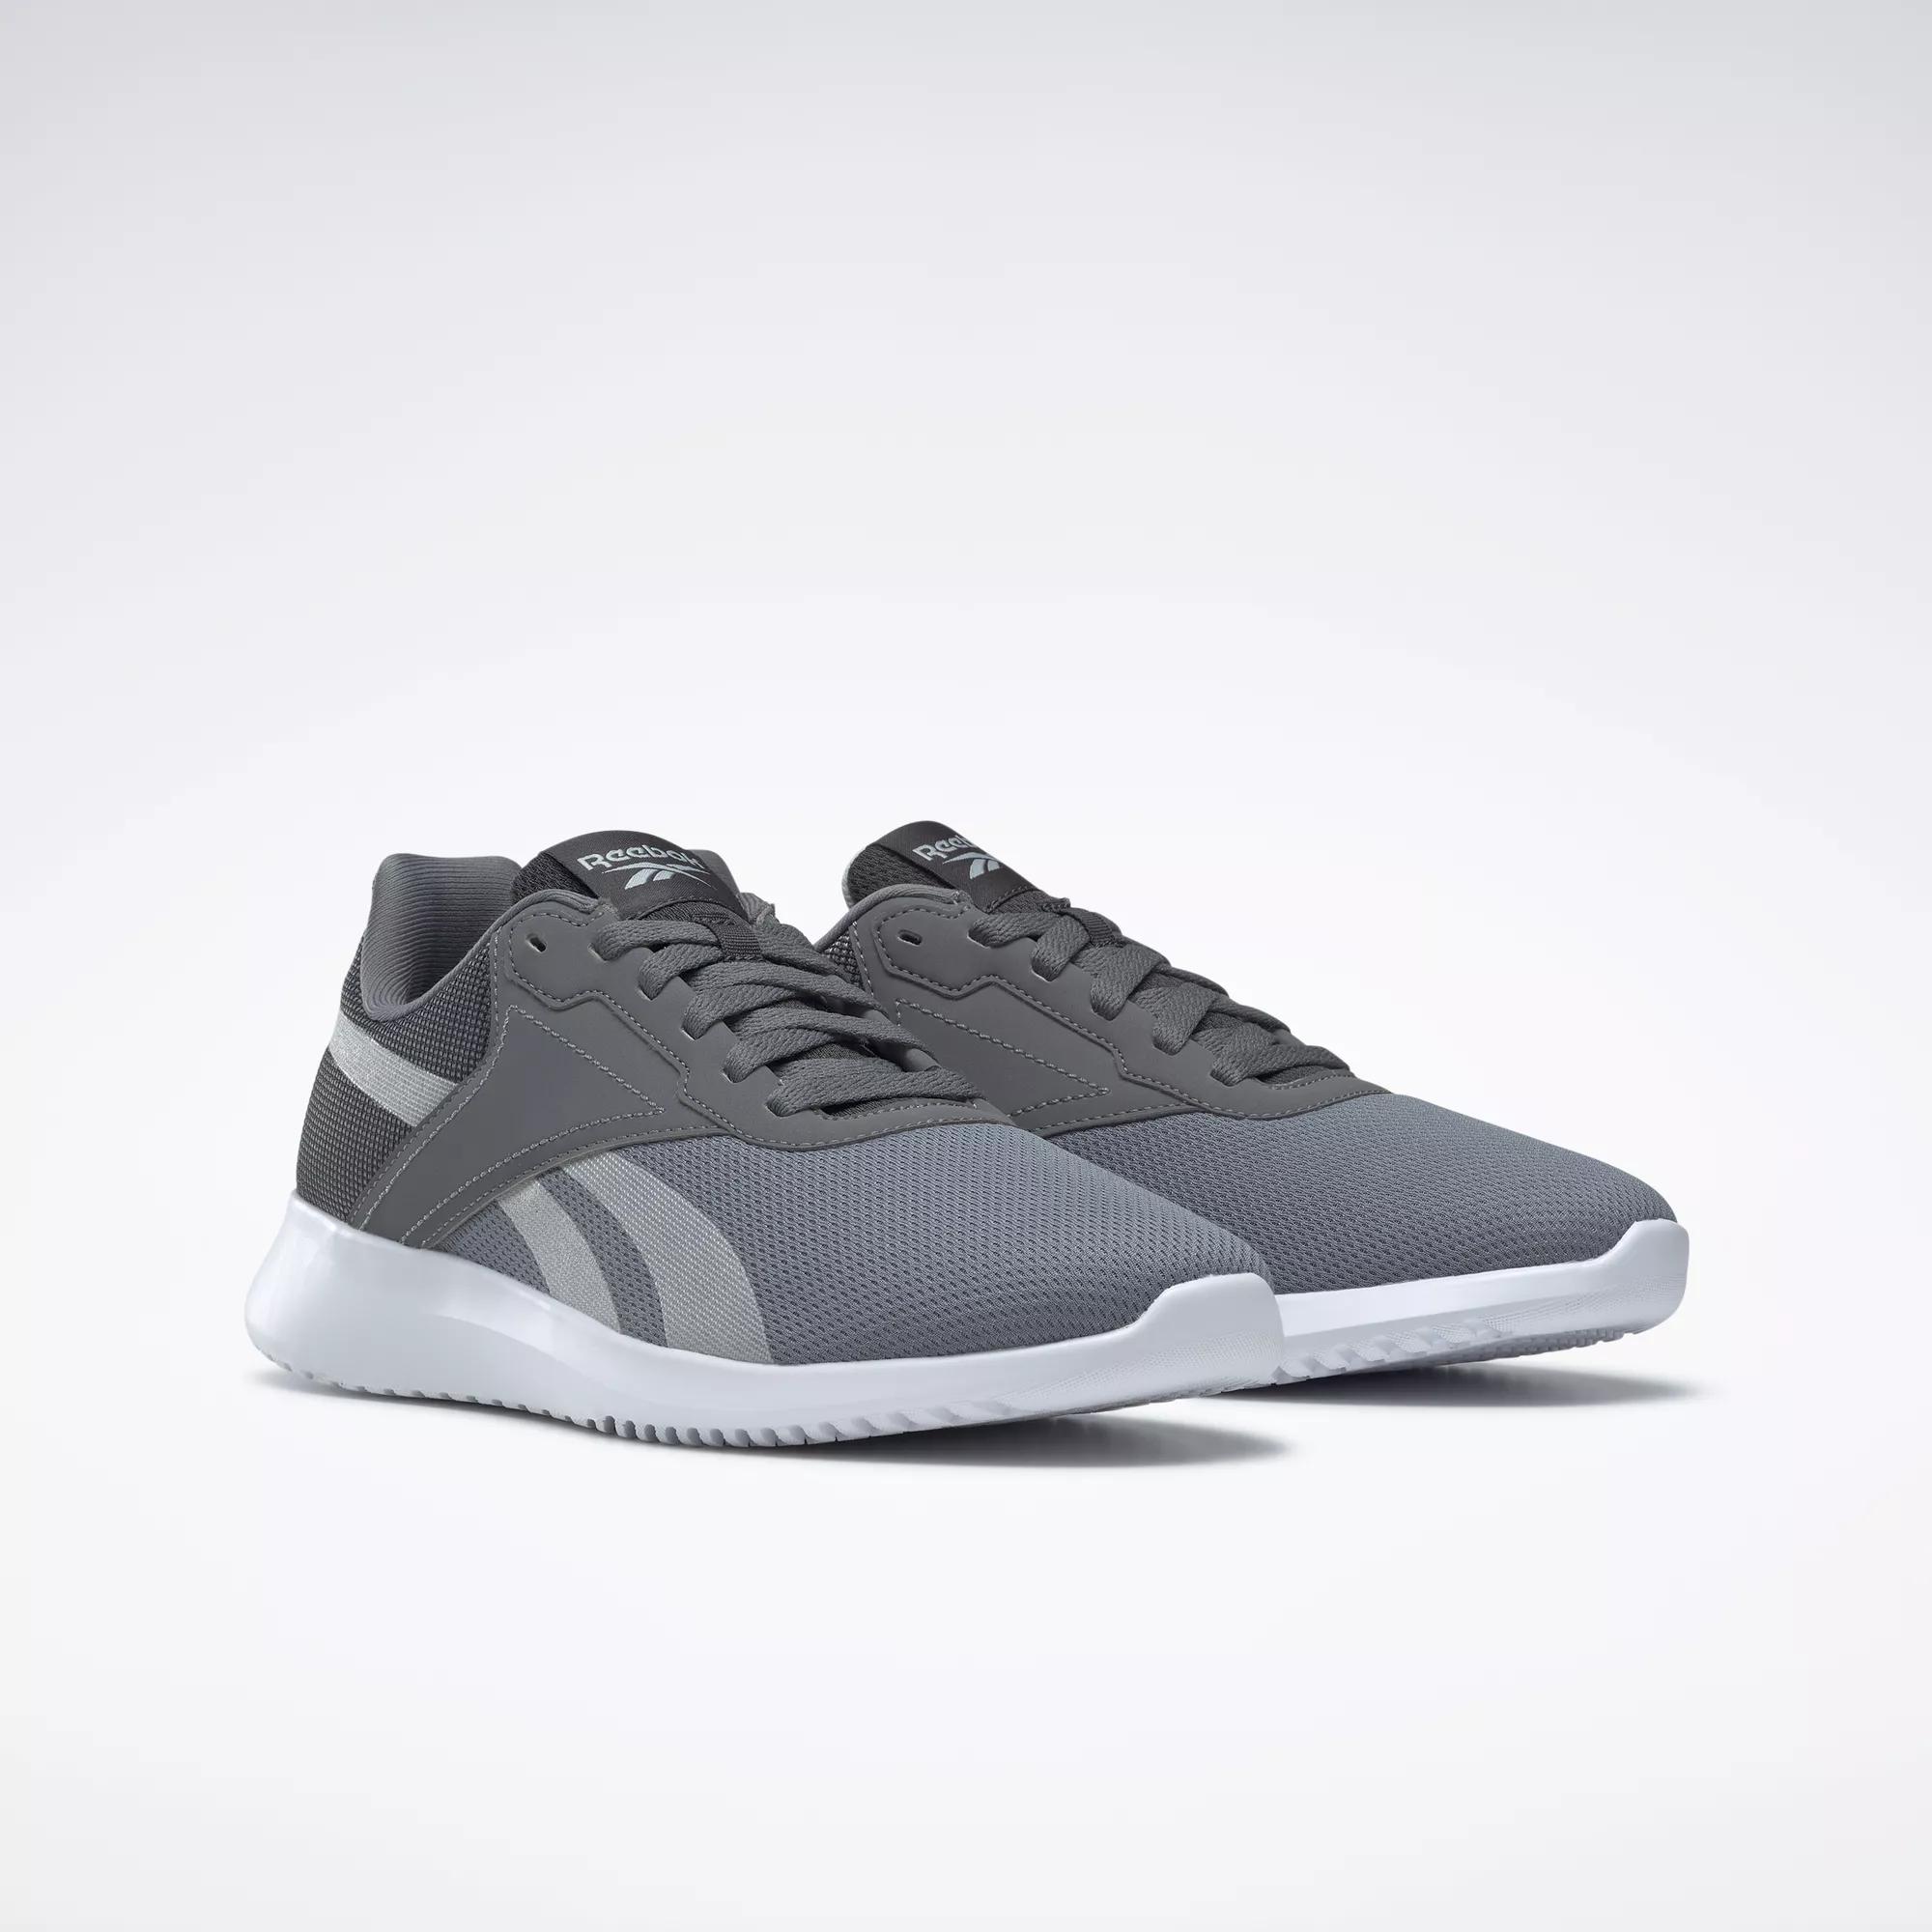 Fluxlite Men's Training Shoes - Pure Grey 6 / Pure Grey 8 / Pure Grey 3 ...